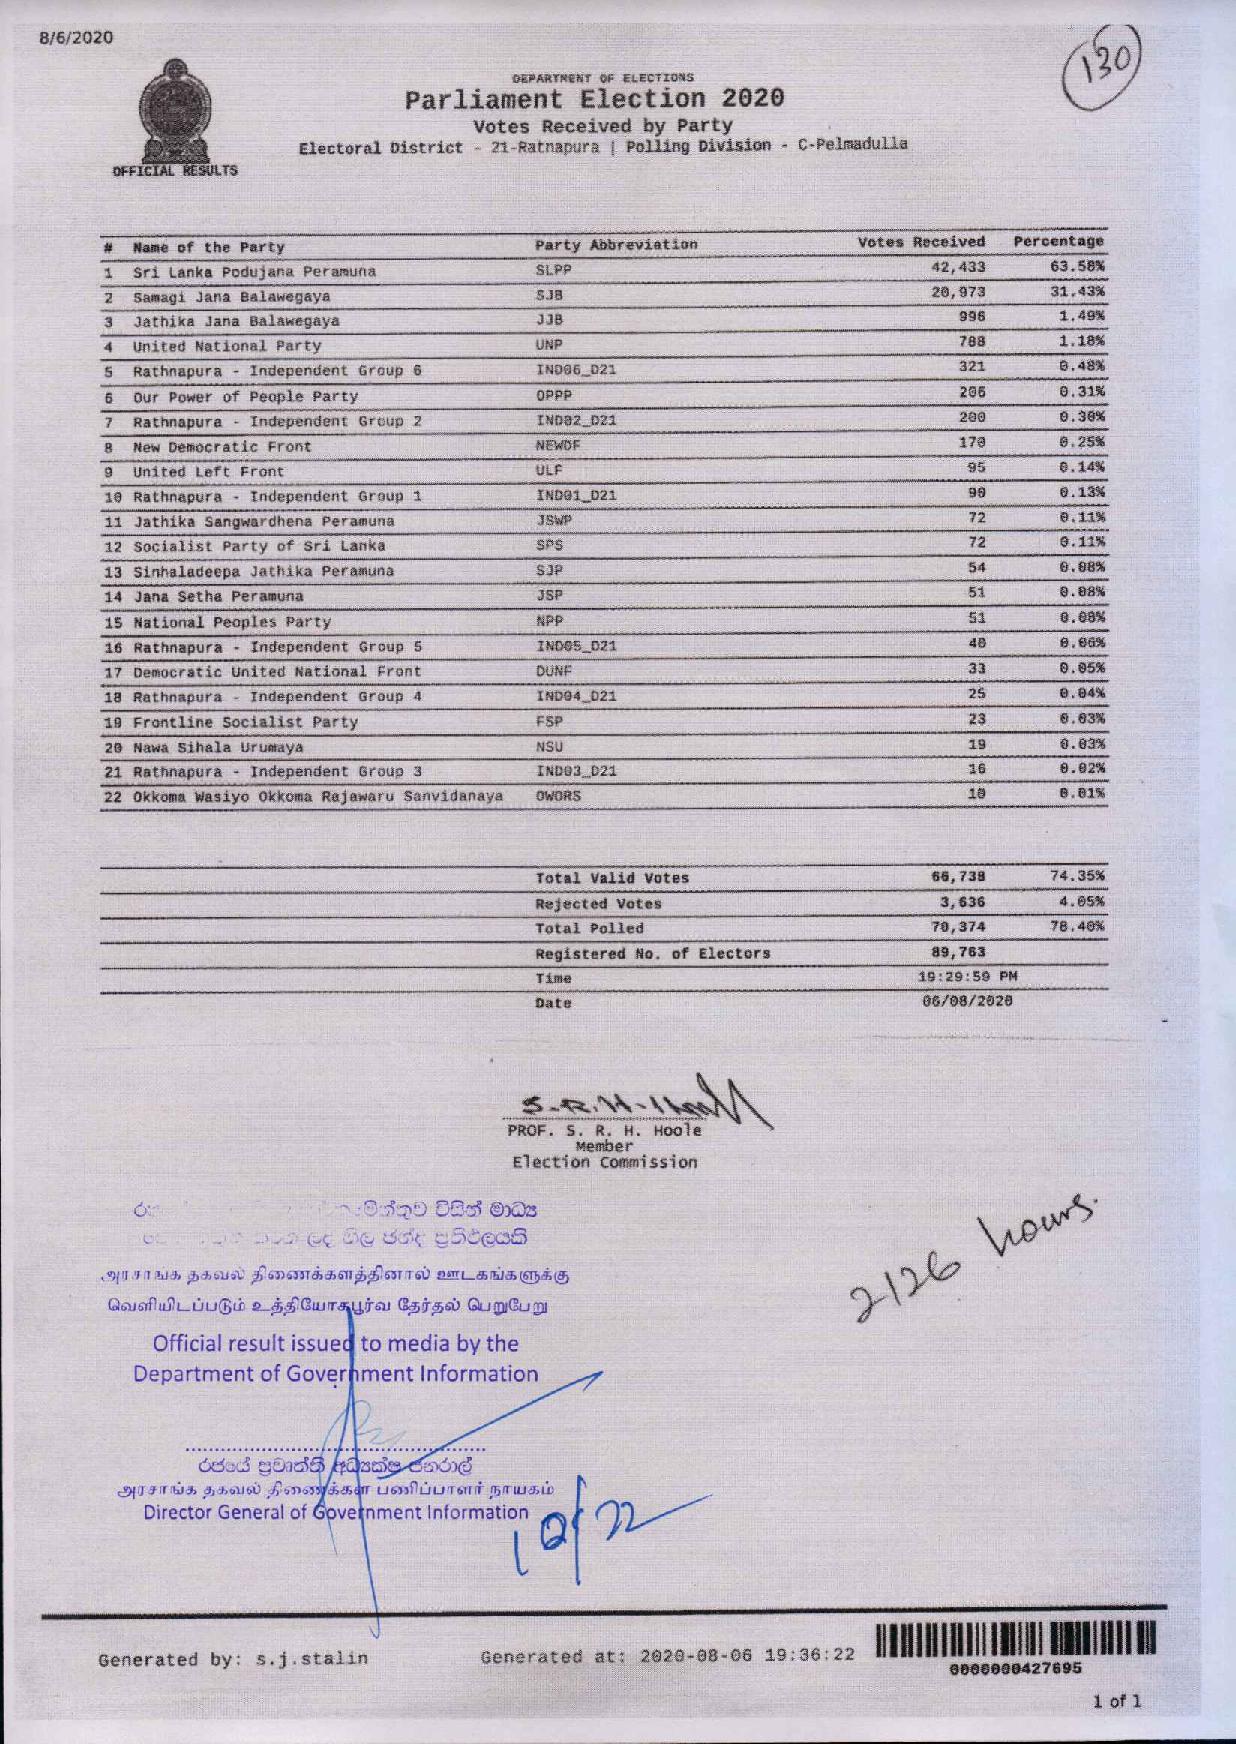 Parliament Election 2020 Ratnapura Pelmaduule page 001